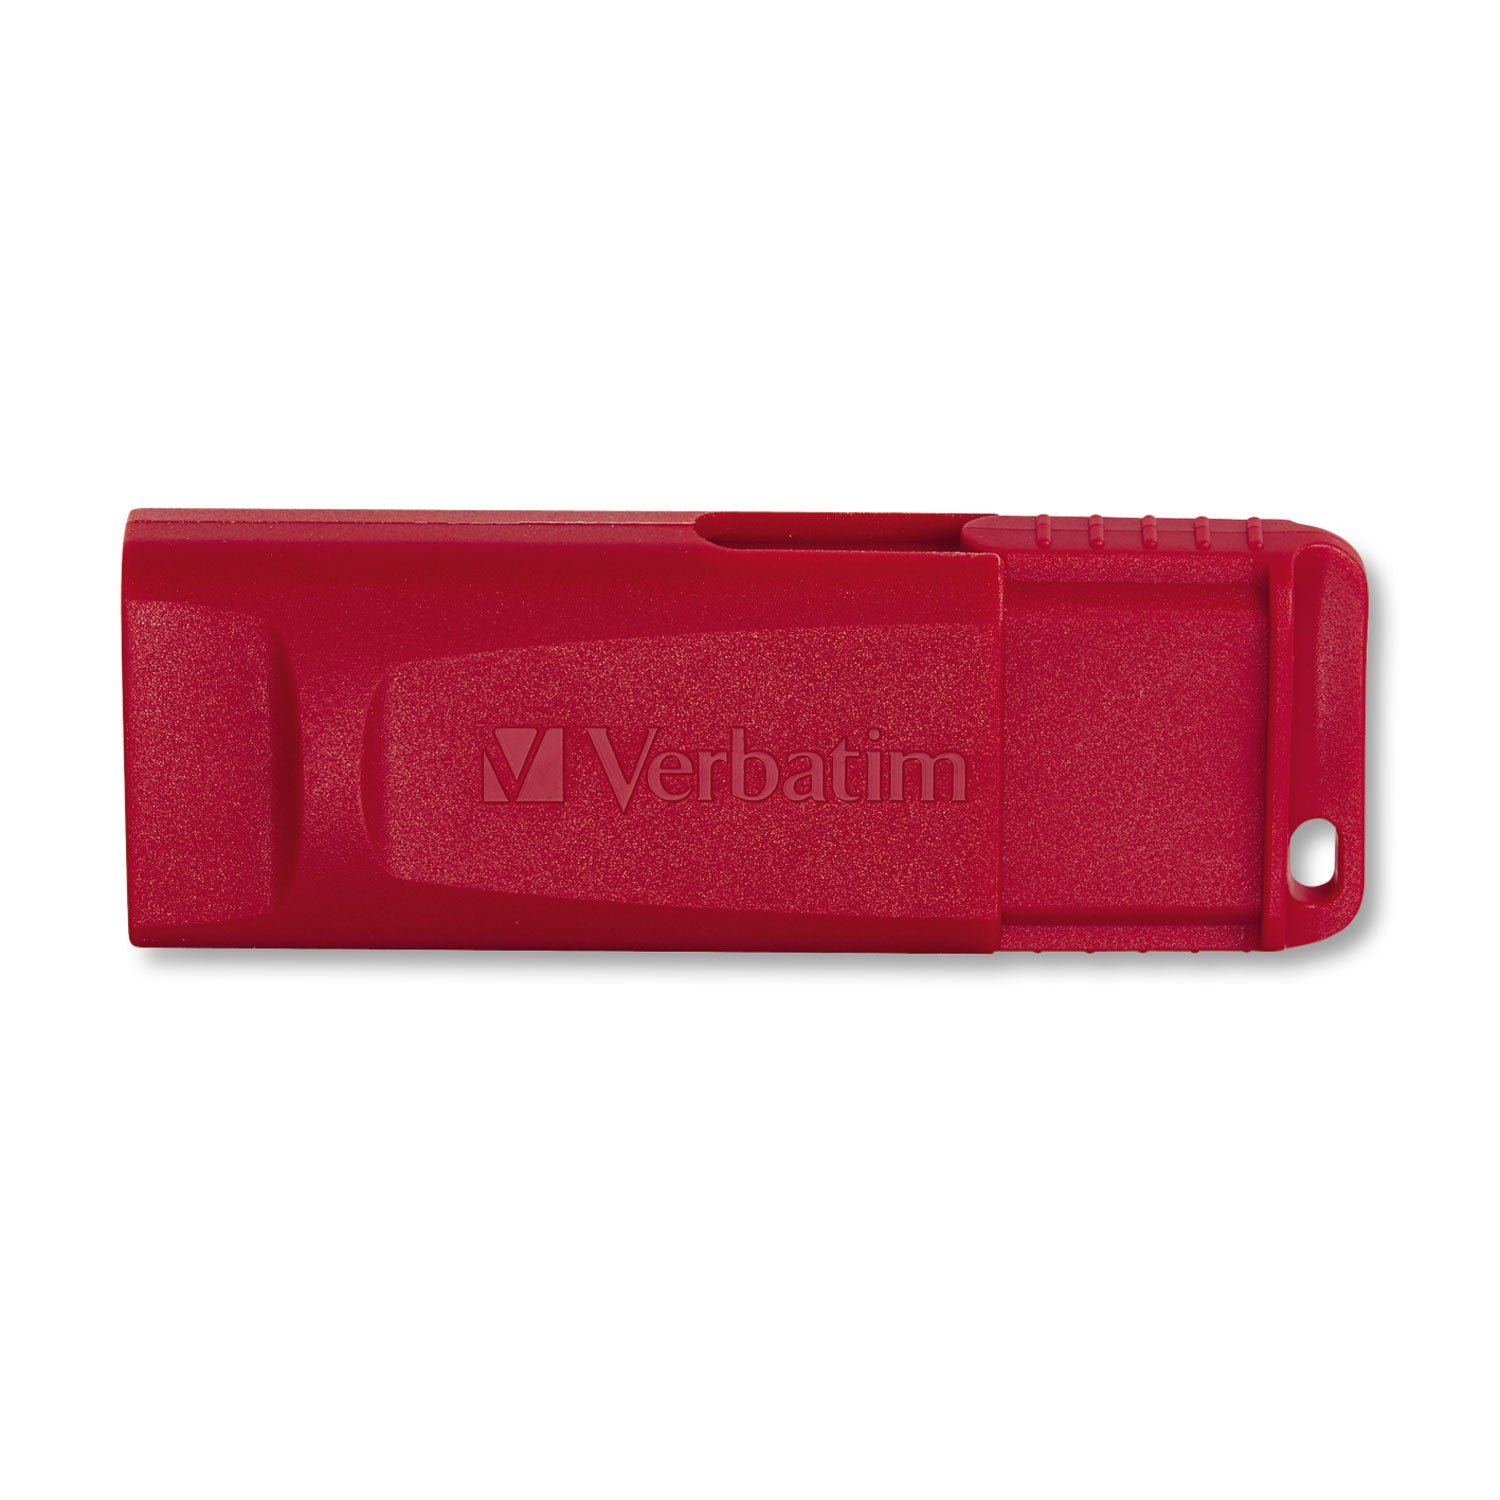 Store 'n' Go USB Flash Drive, 8 GB, Red - 